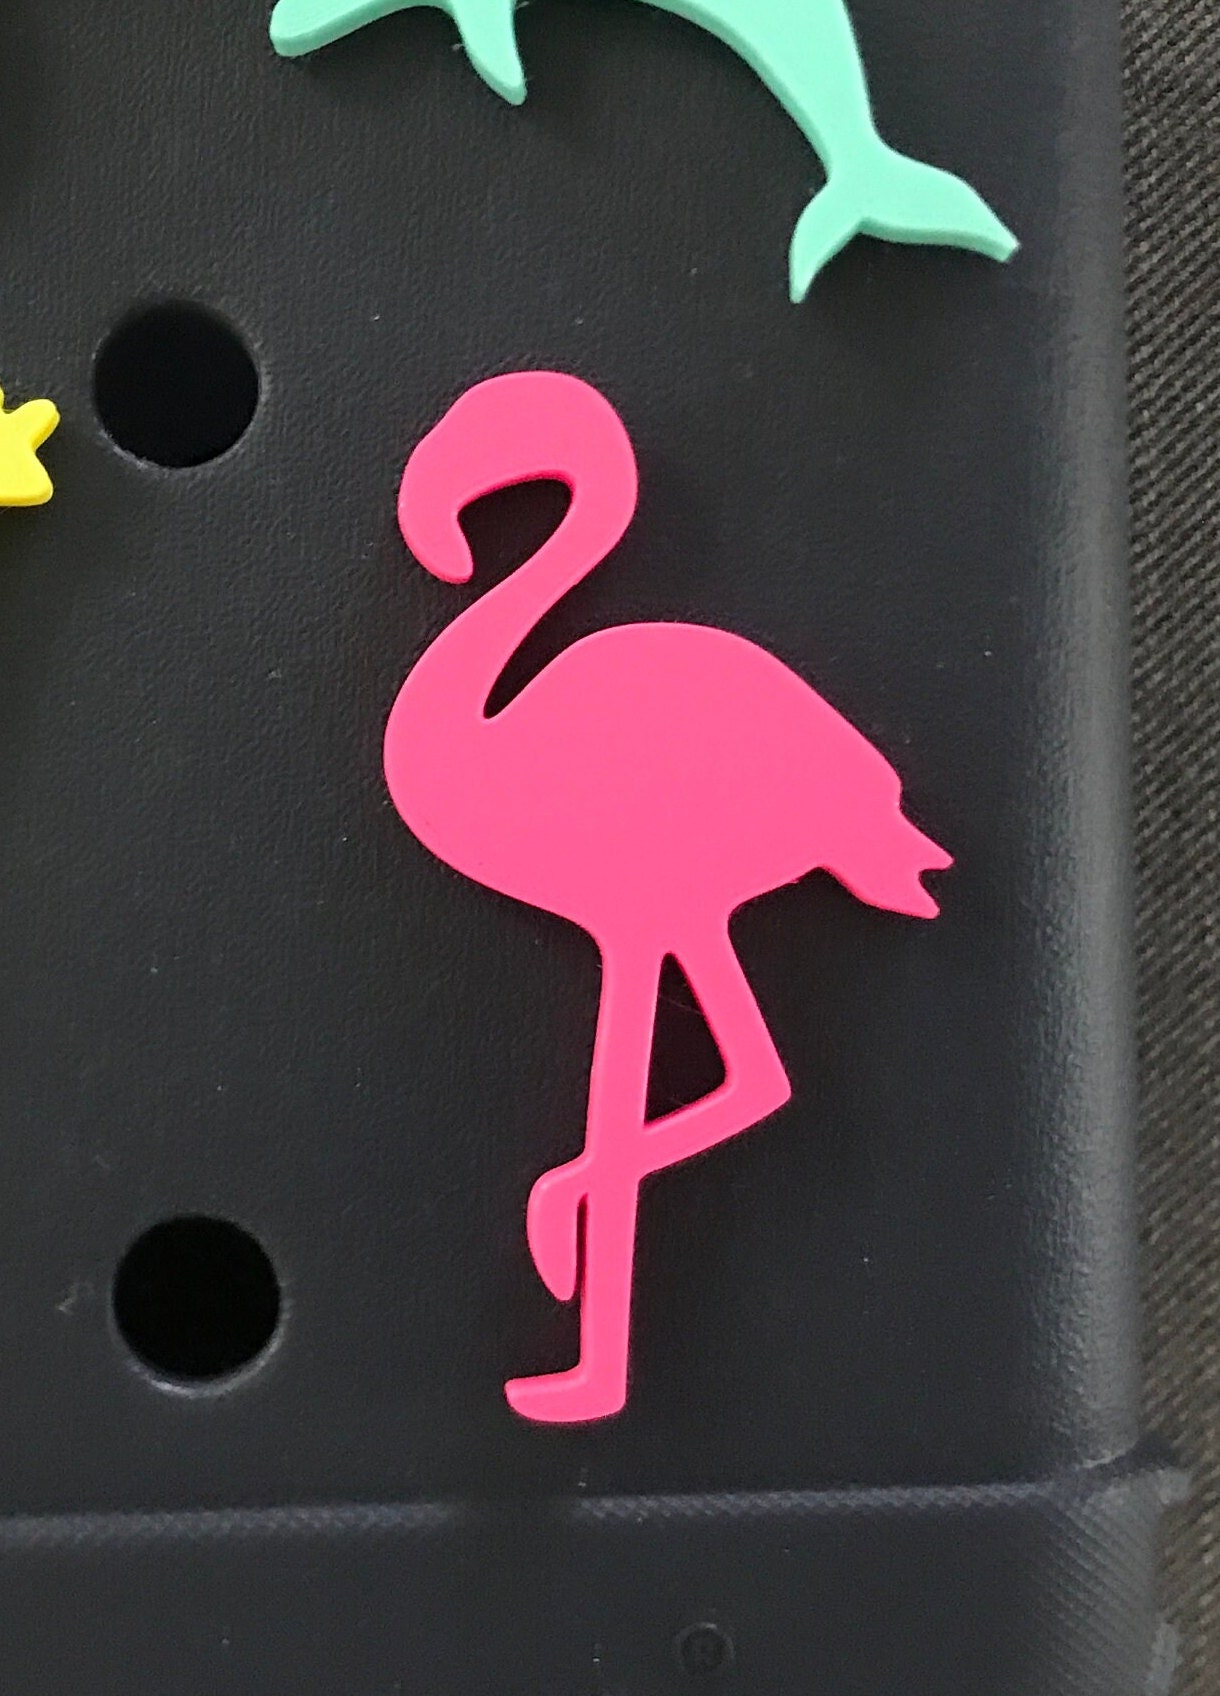 Bitty Bogg Bag Bits-bitty Bogg Charms-flamingo Bitty 